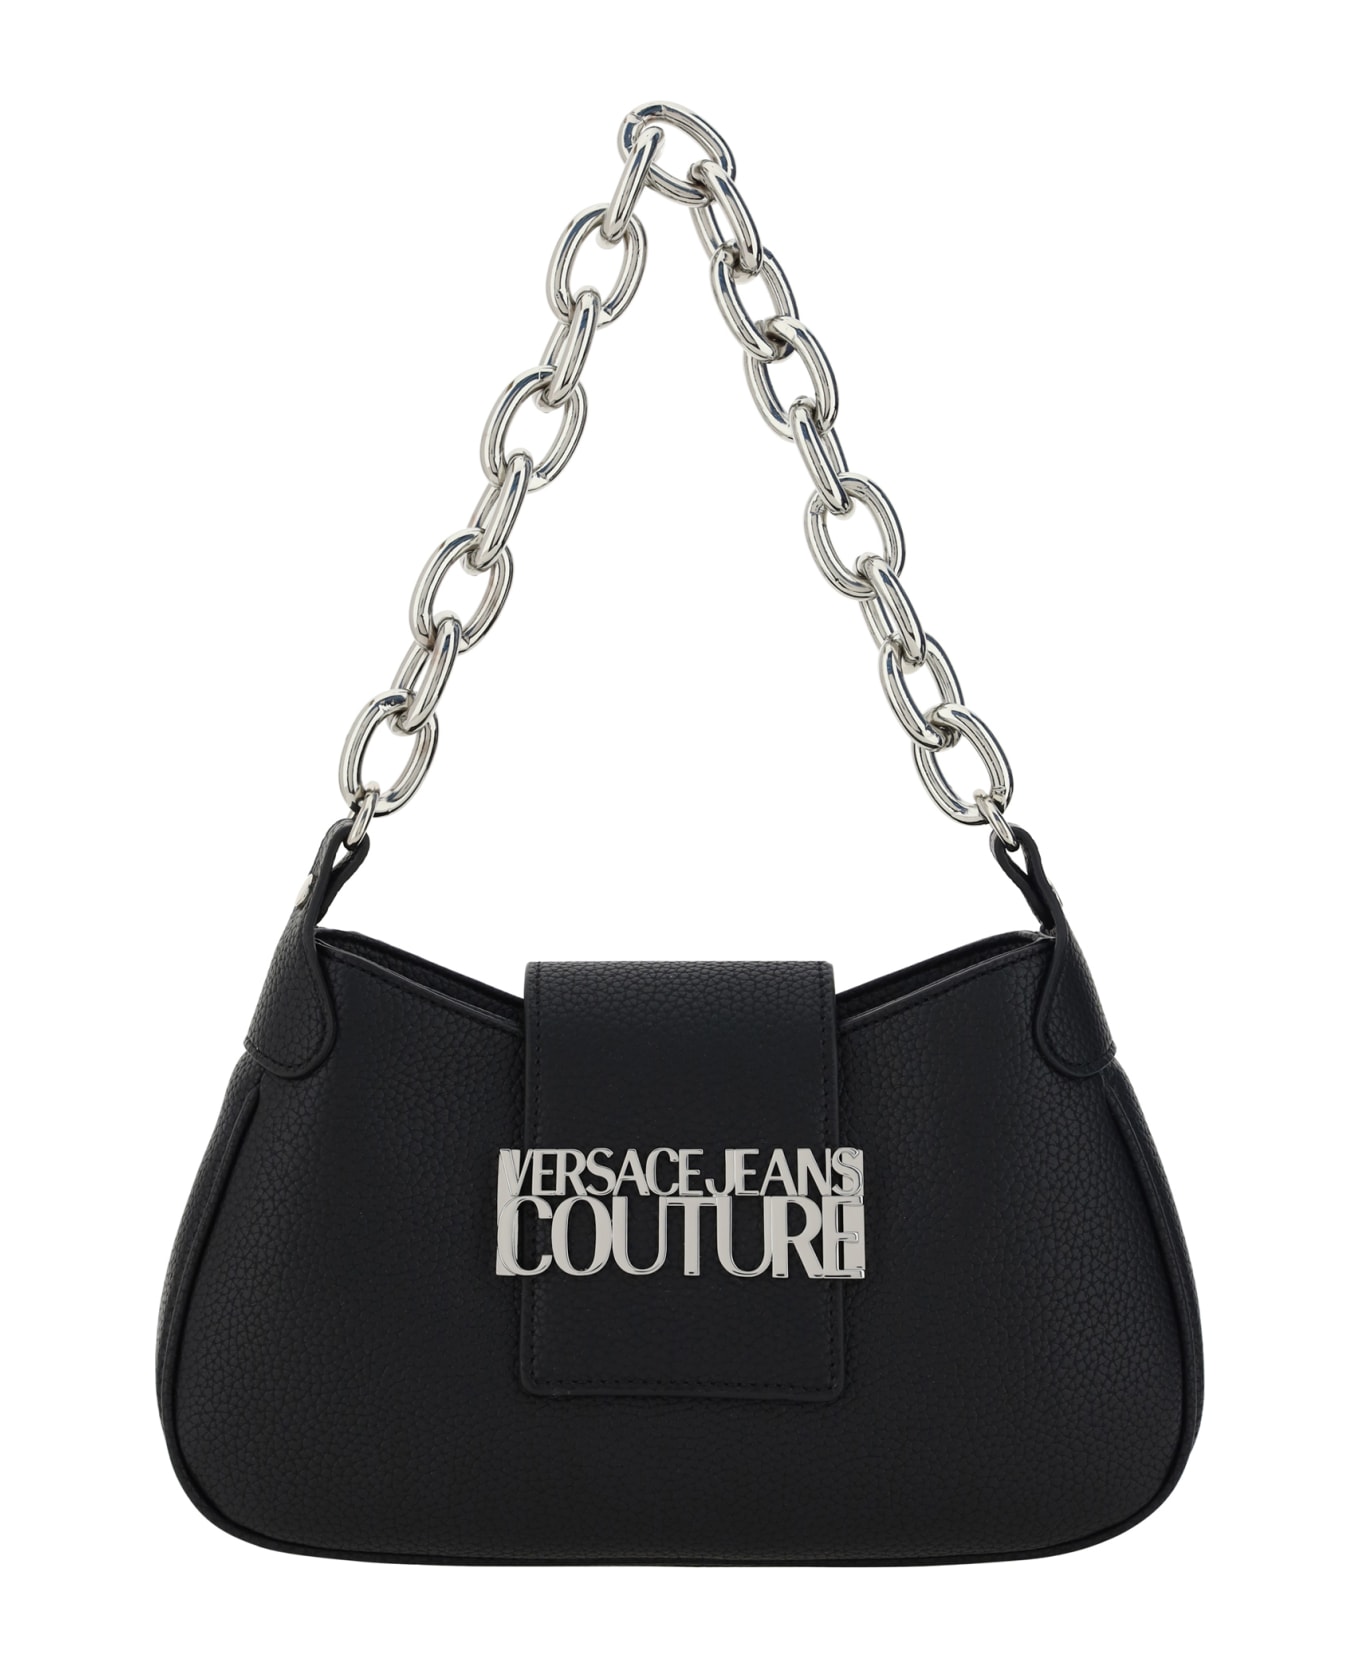 Versace Jeans Couture Shoulder Bag - Black